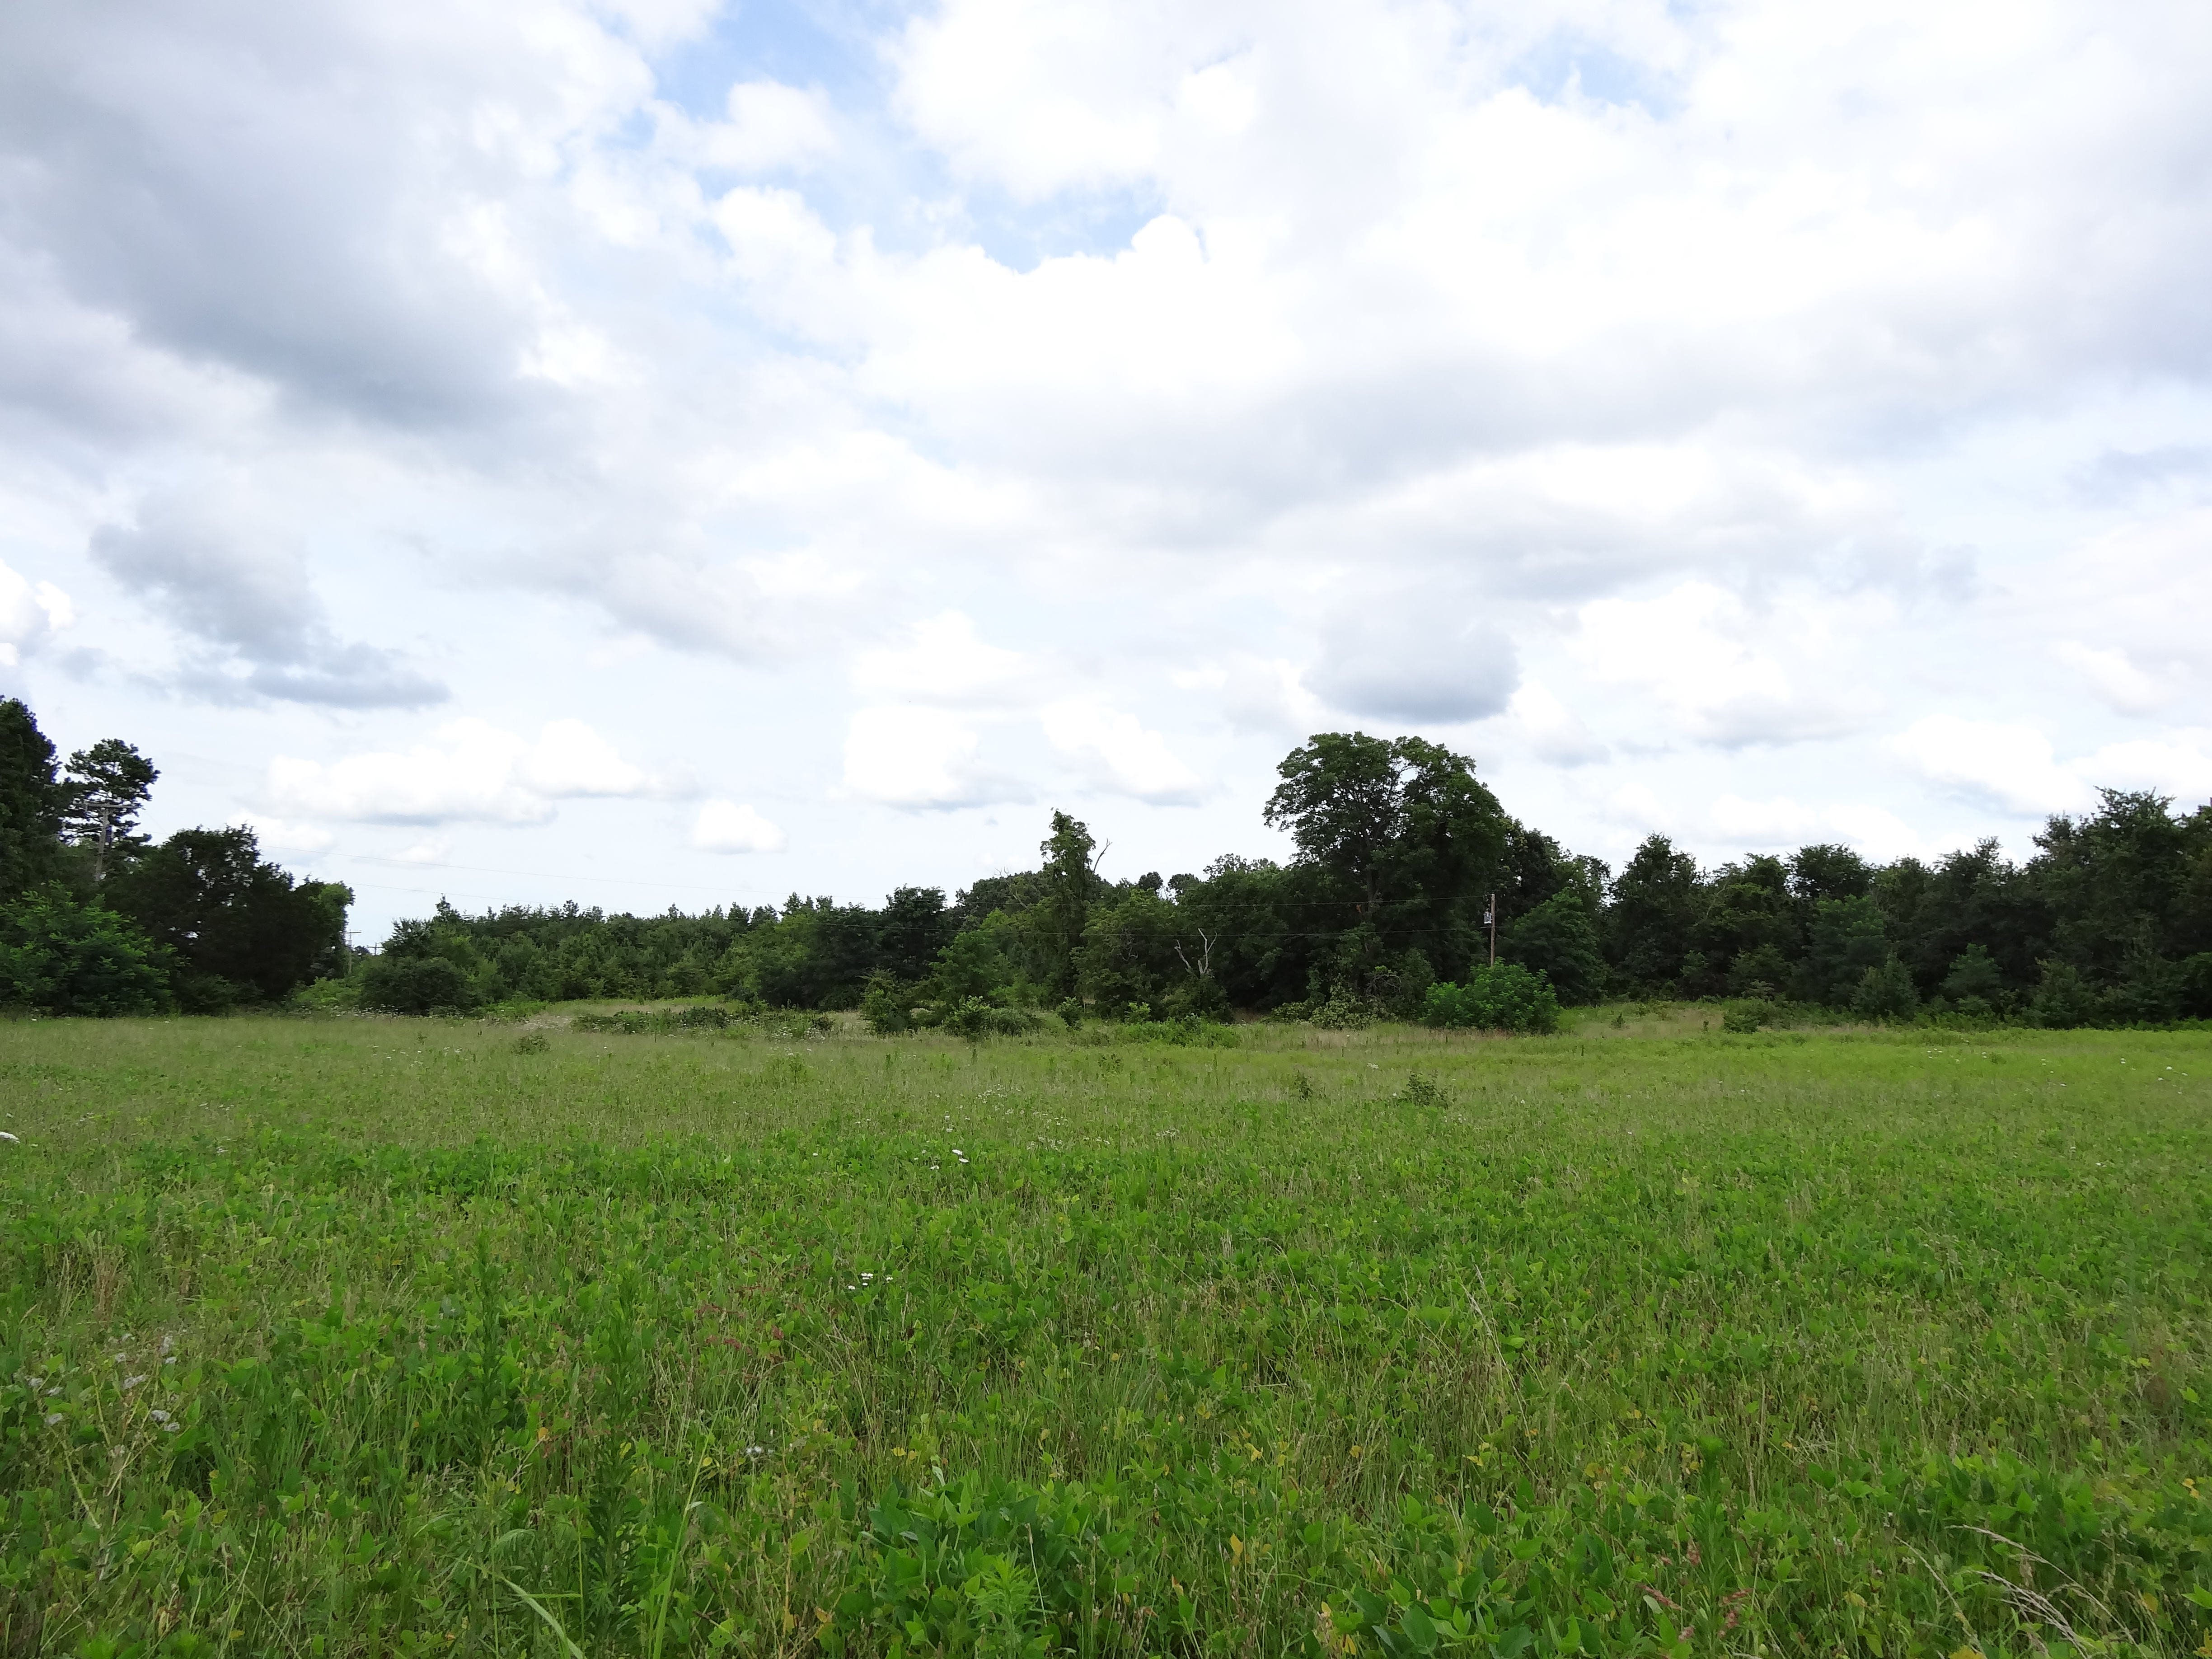 File:Grass field; Clover, VA; 2013-07-14.JPG - Wikimedia Commons